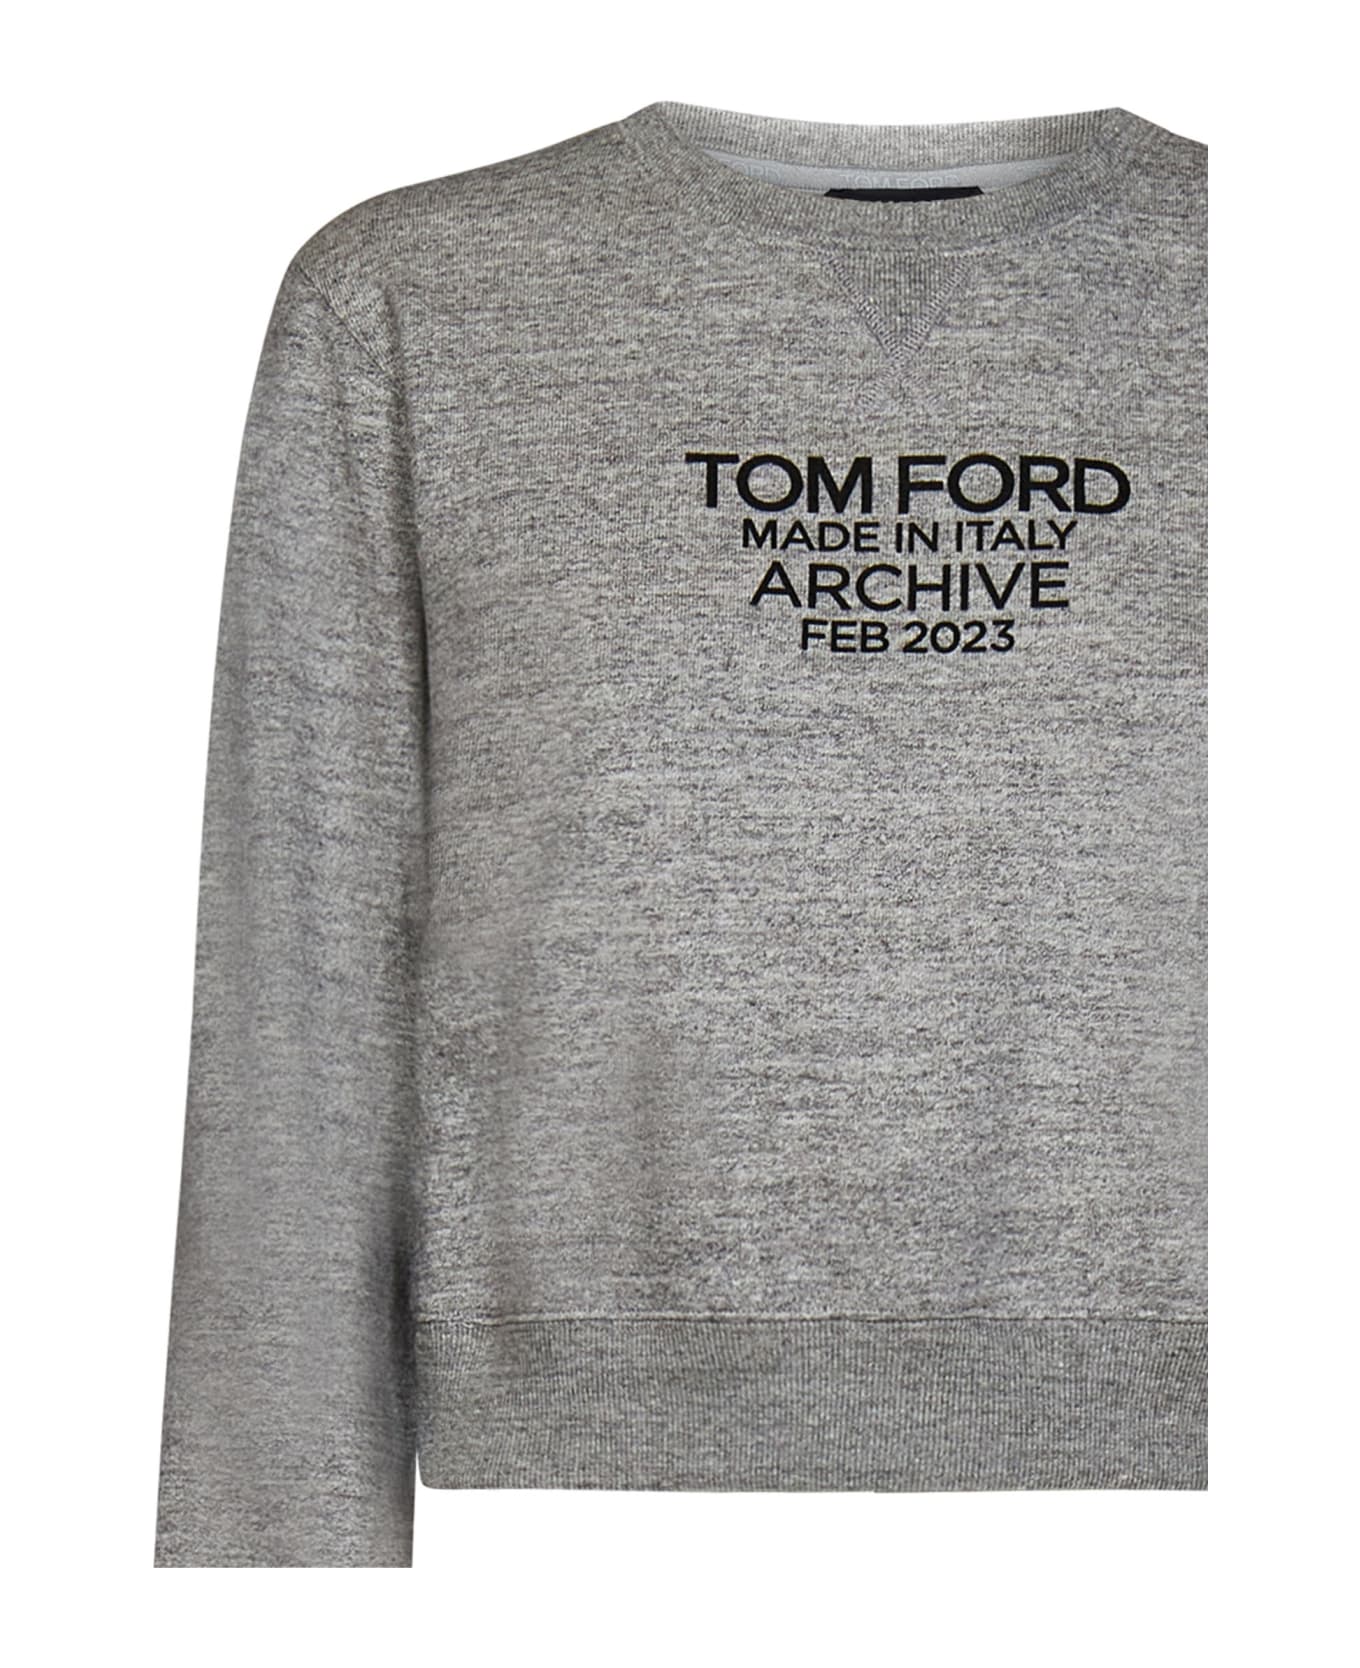 Tom Ford Logo Printed Crewneck Sweatshirt - GREY